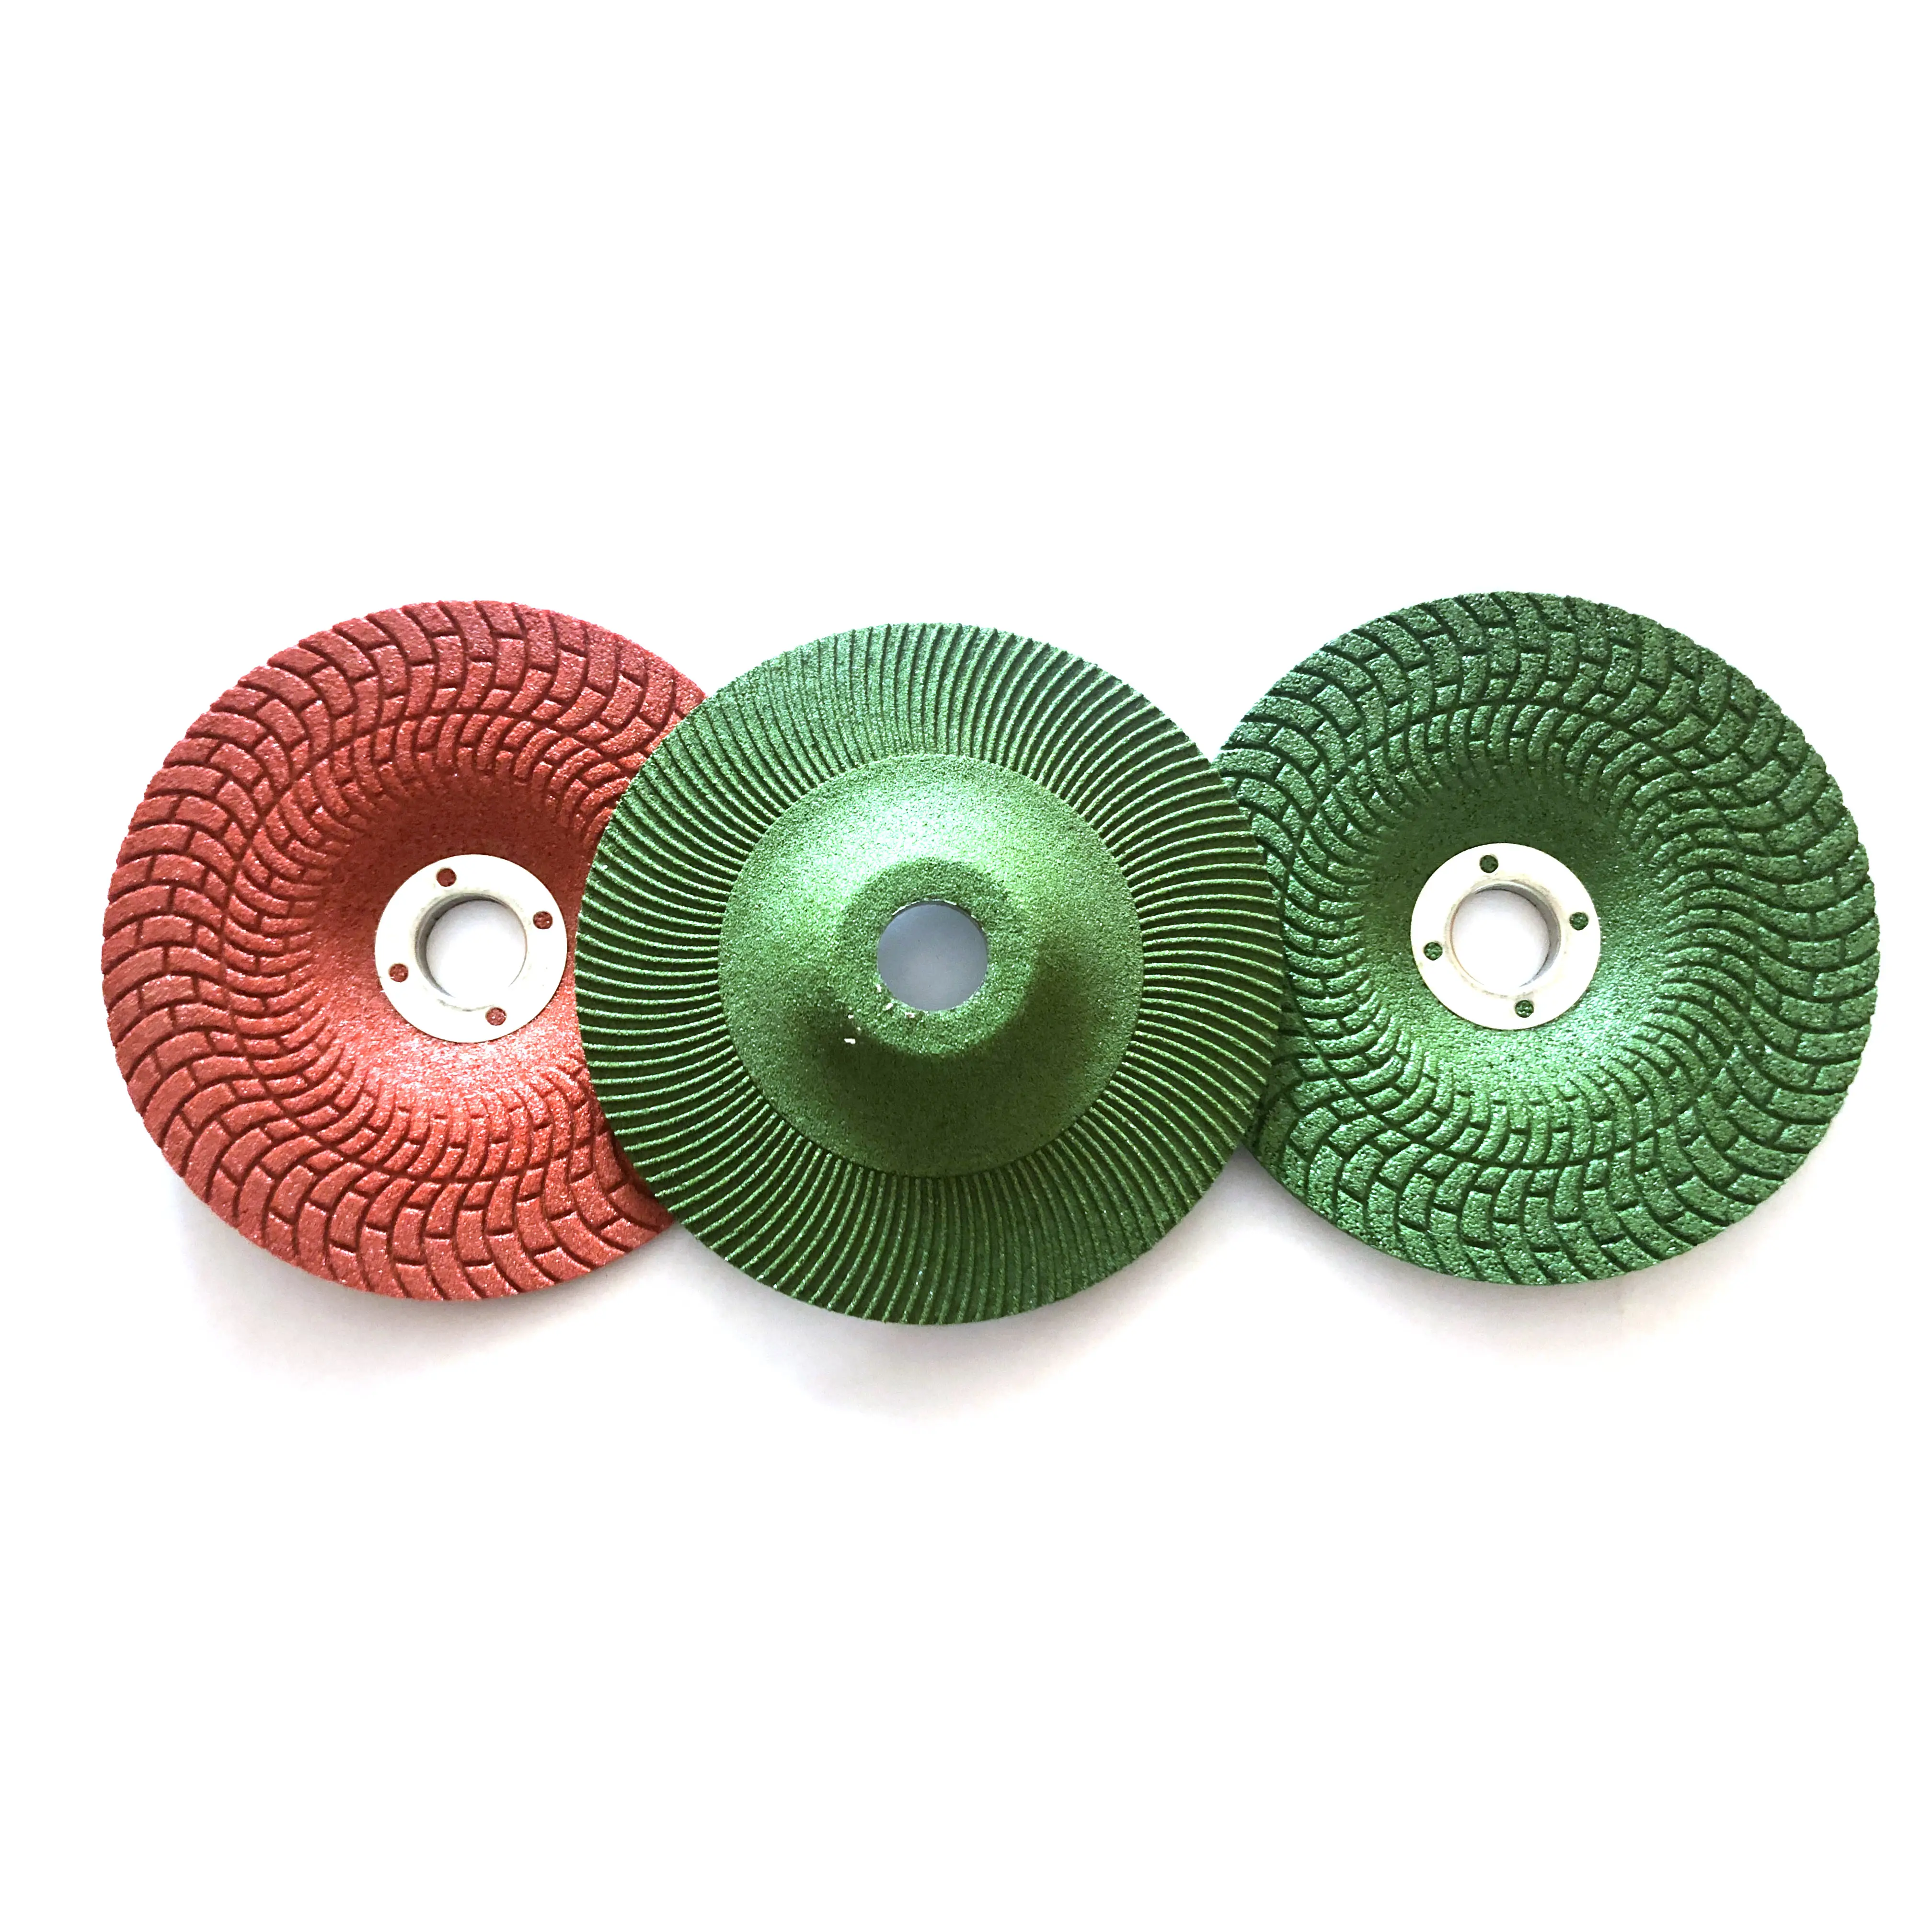 Japanese Korean Market Flexible Grinding Disc for Stainless Steel Metal Zirconia Grain Material 4" Green Red Abrasive Disc 4"-7"